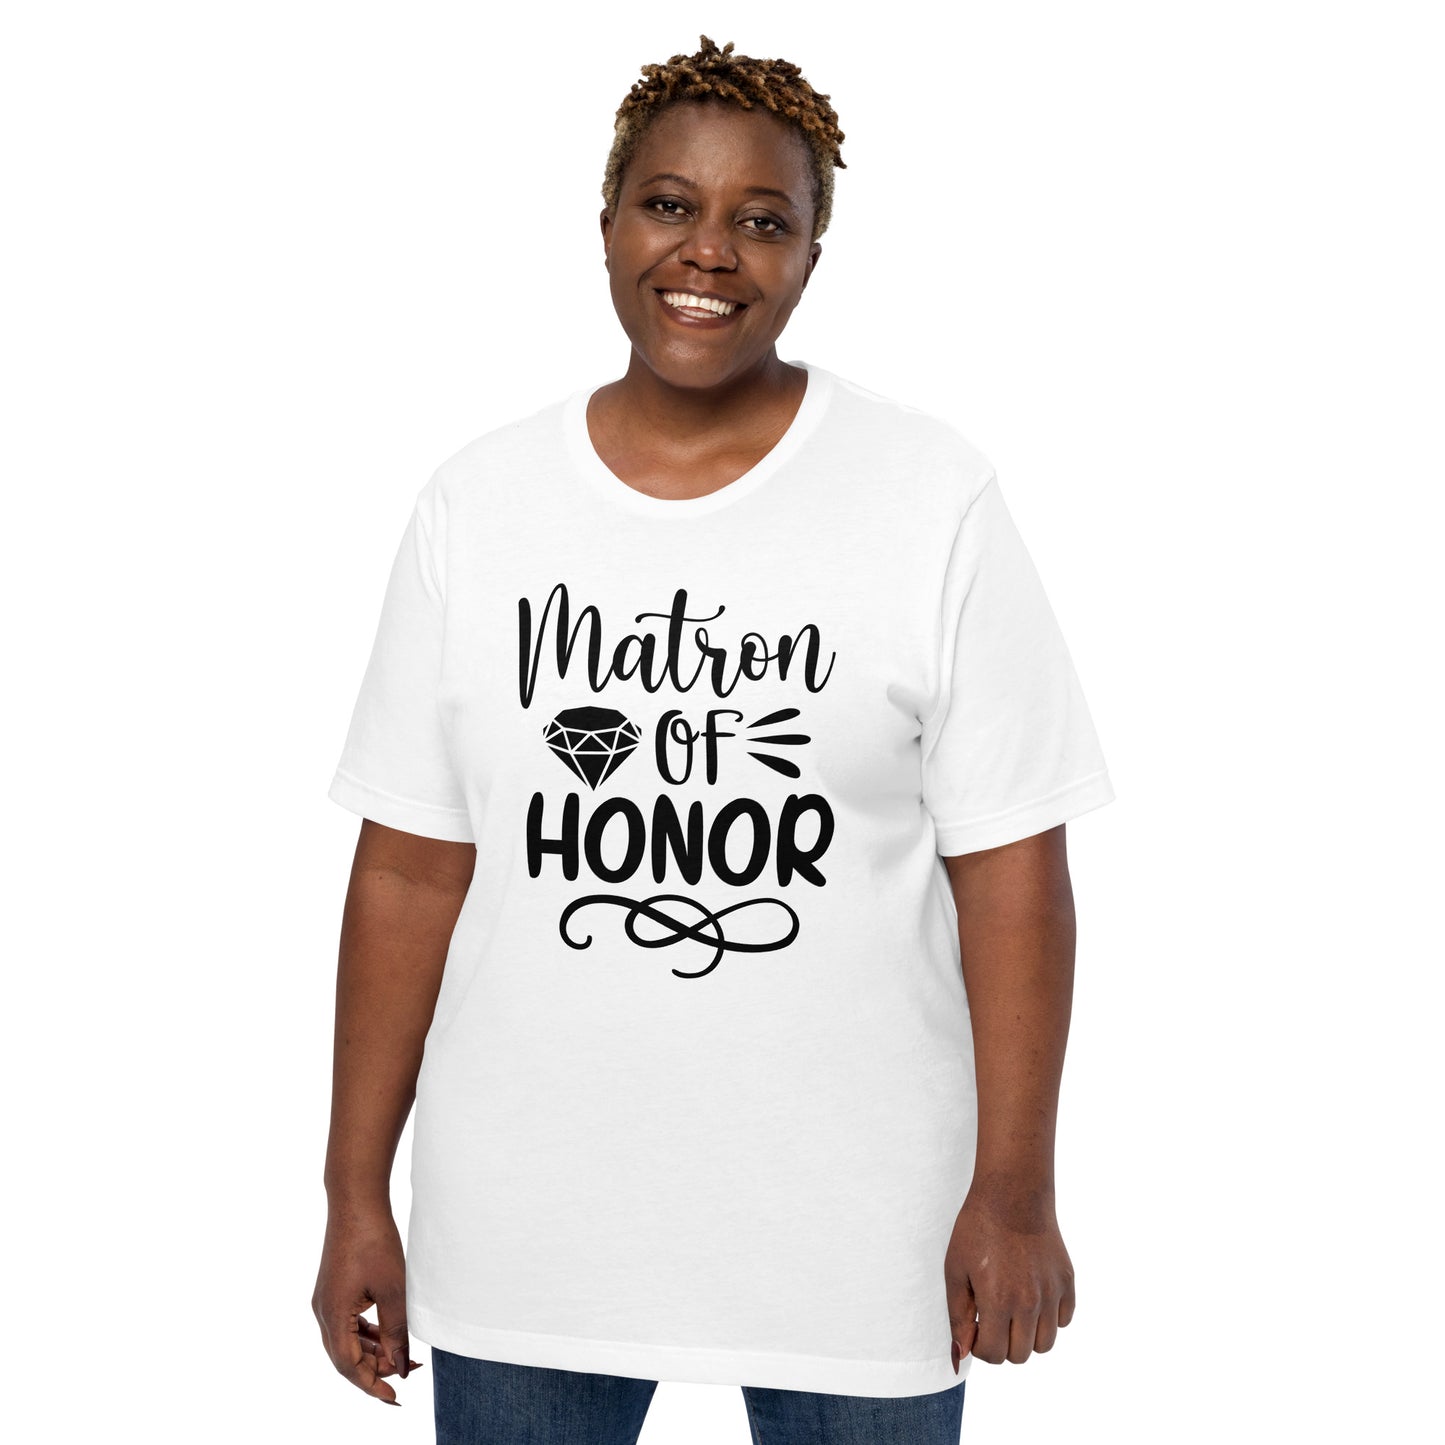 "Matron Of Honor" Customizable T-shirt